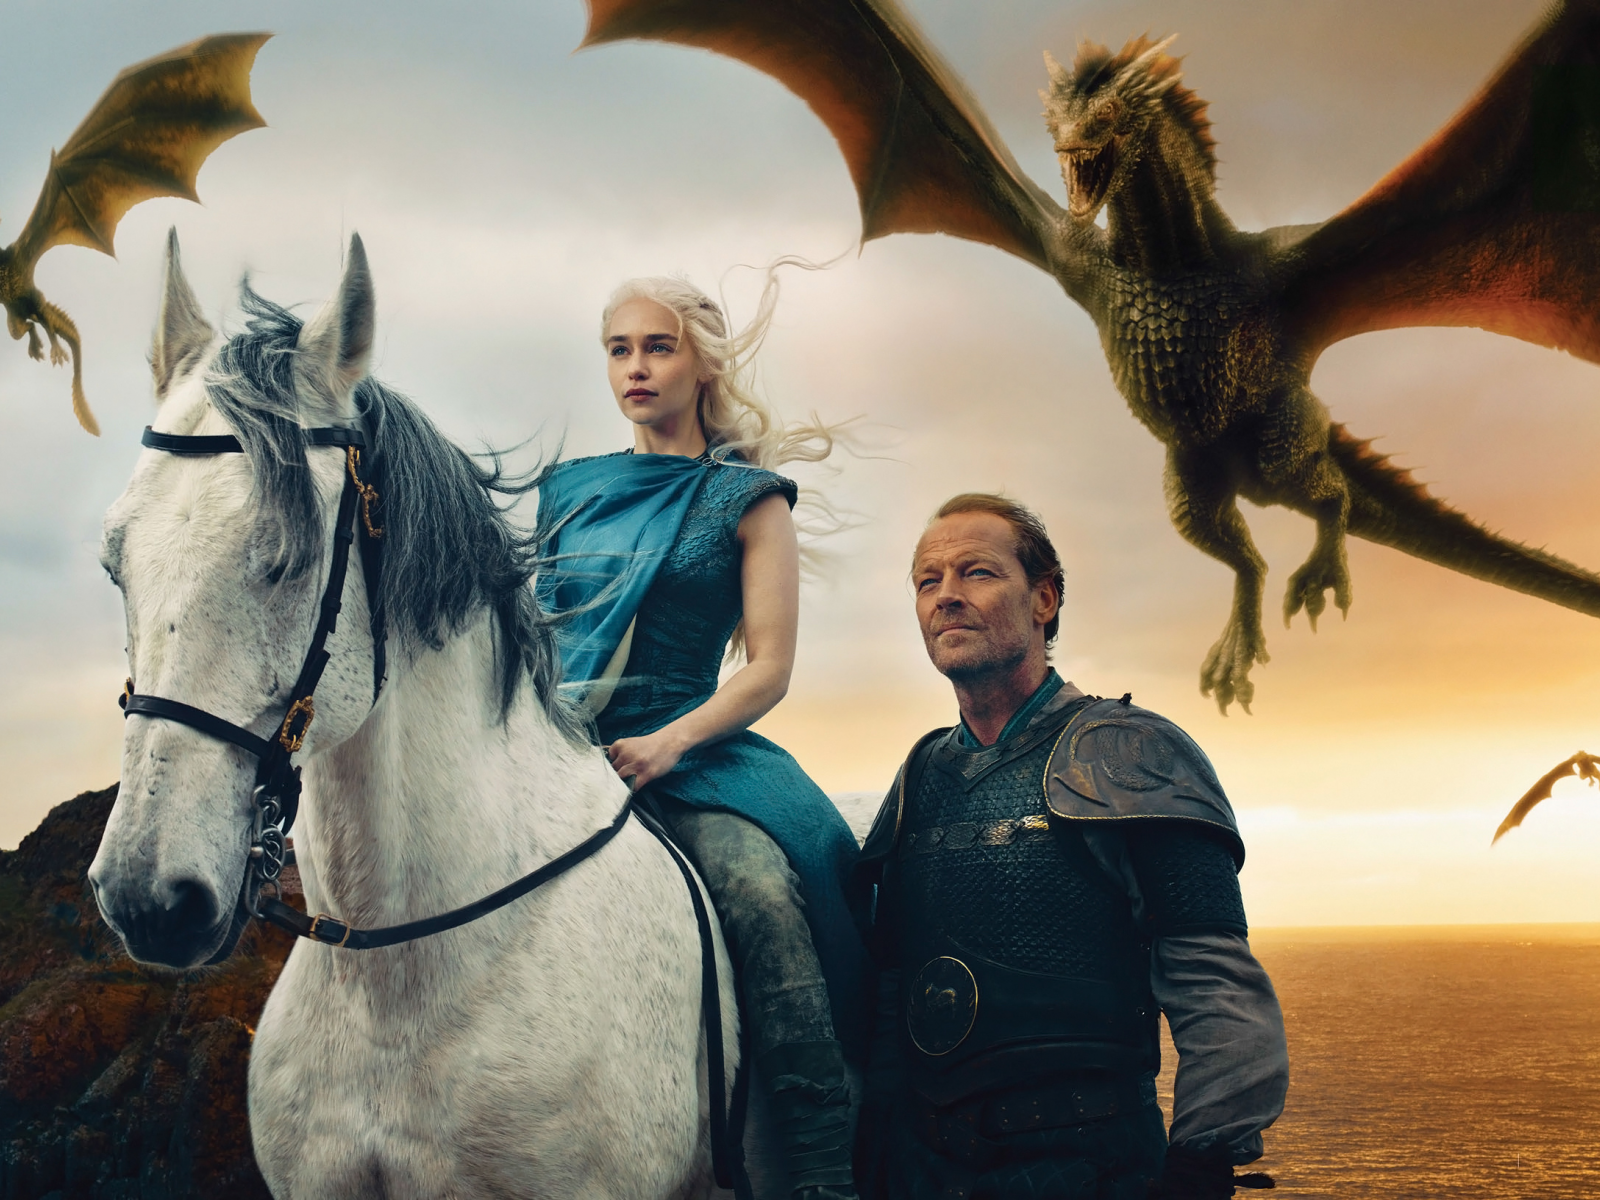 emilia clarke, драконы, game of thrones, iain glen, jorah mormont, daenerys targaryen